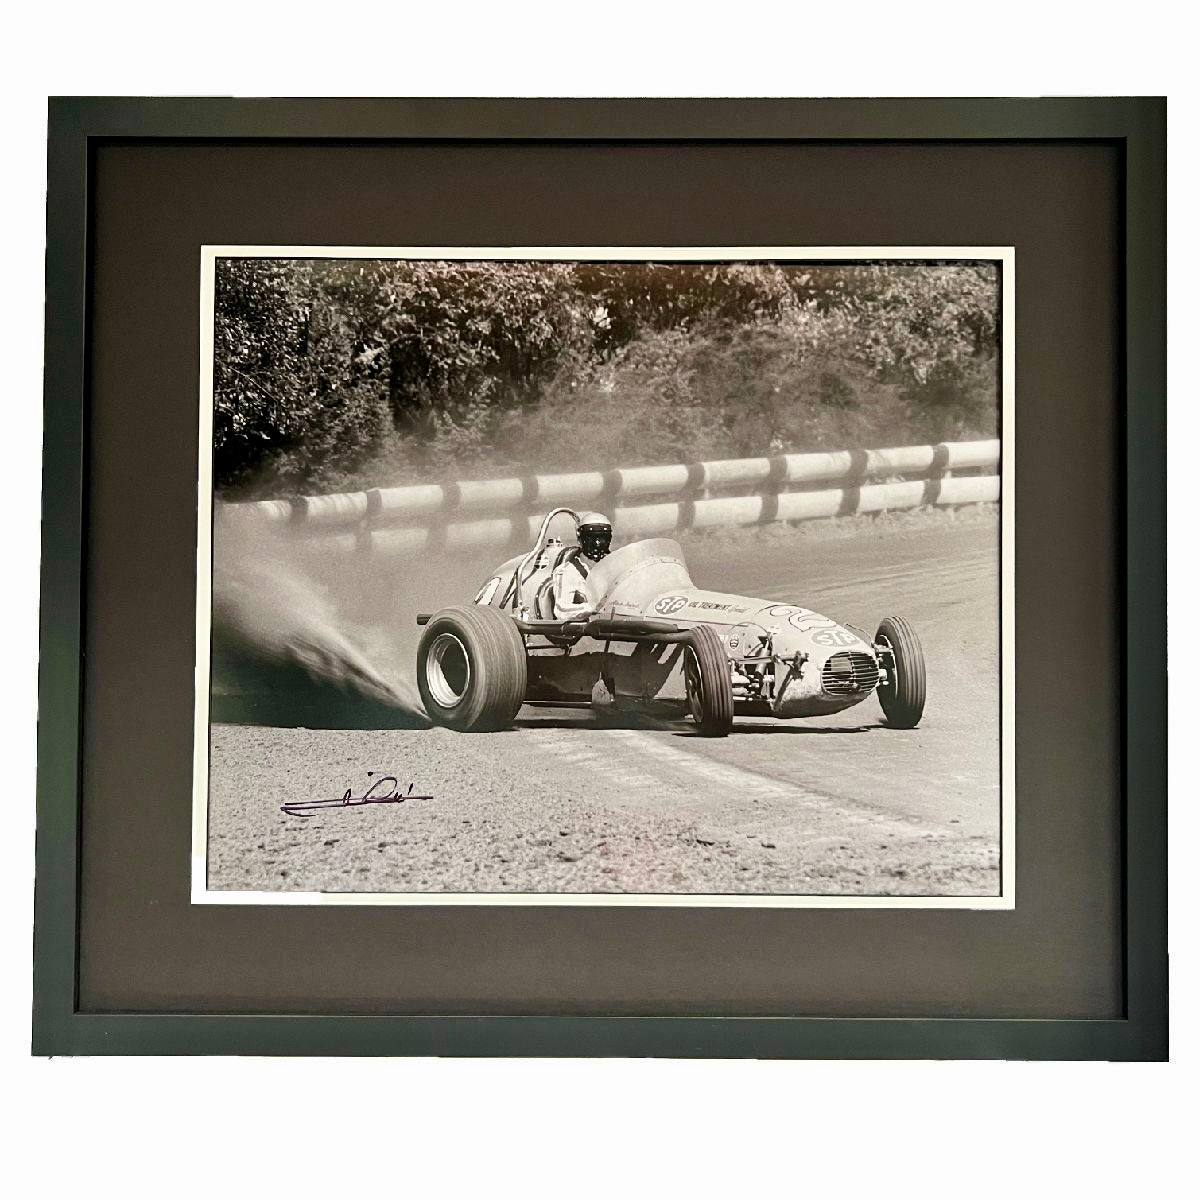 1969 Mario Andretti Signed Sacramento Dirt Champ Car 16x20" Limited Edition /25 Framed Photo